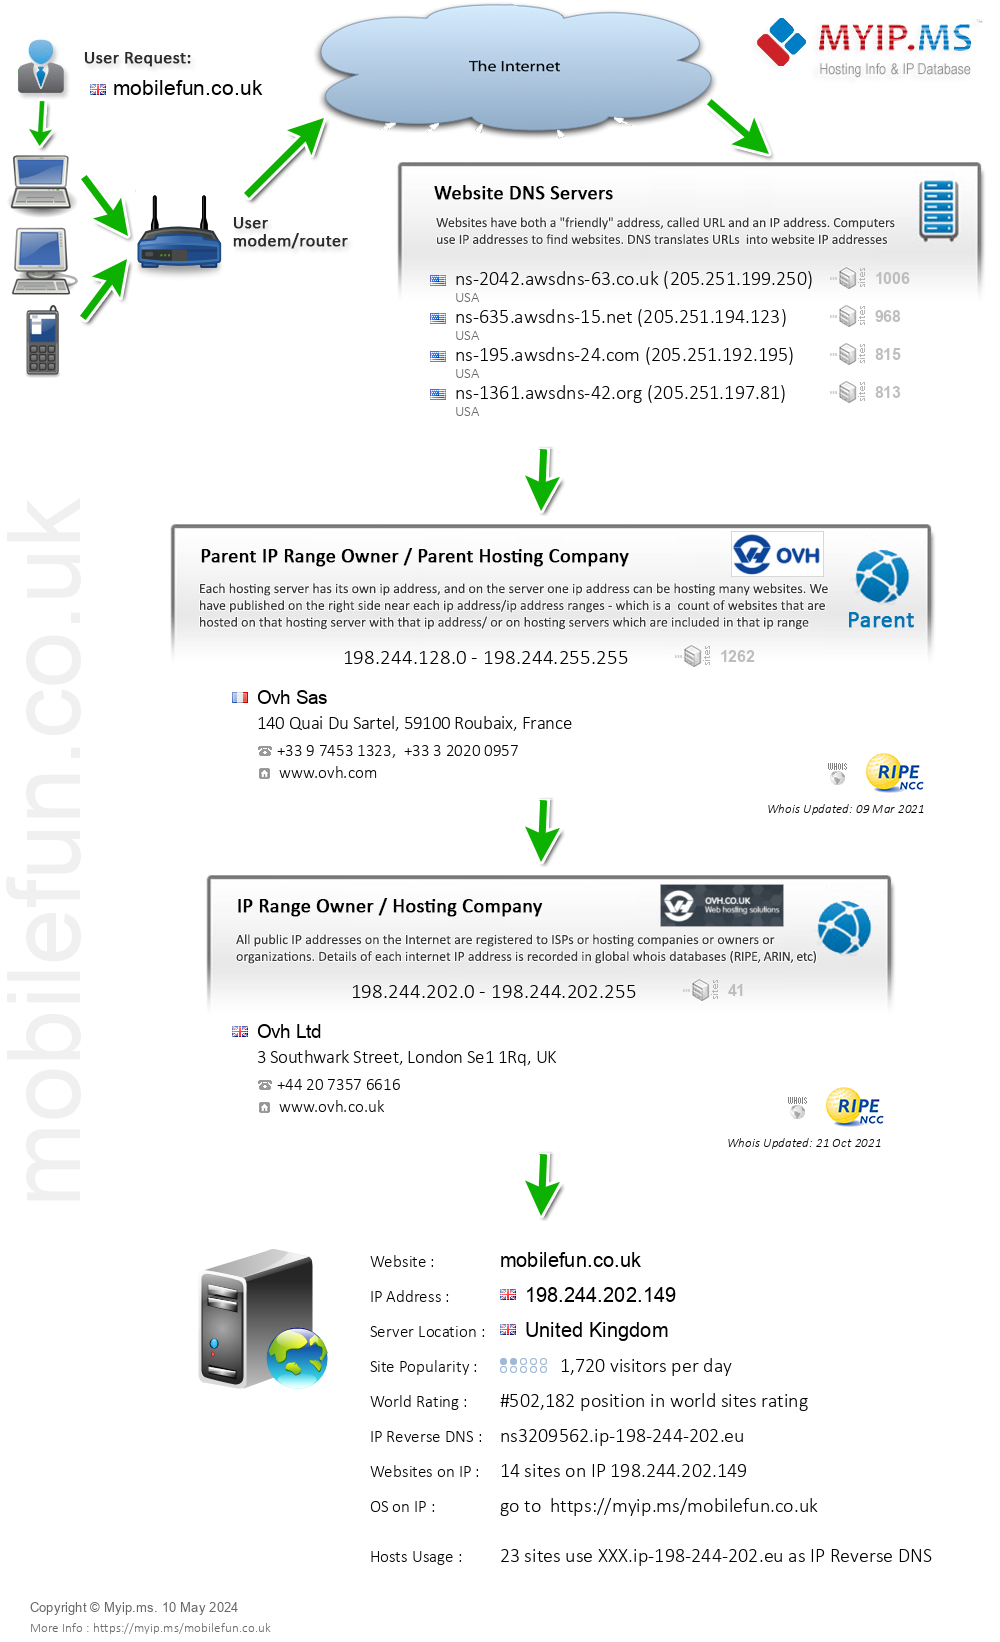 Mobilefun.co.uk - Website Hosting Visual IP Diagram